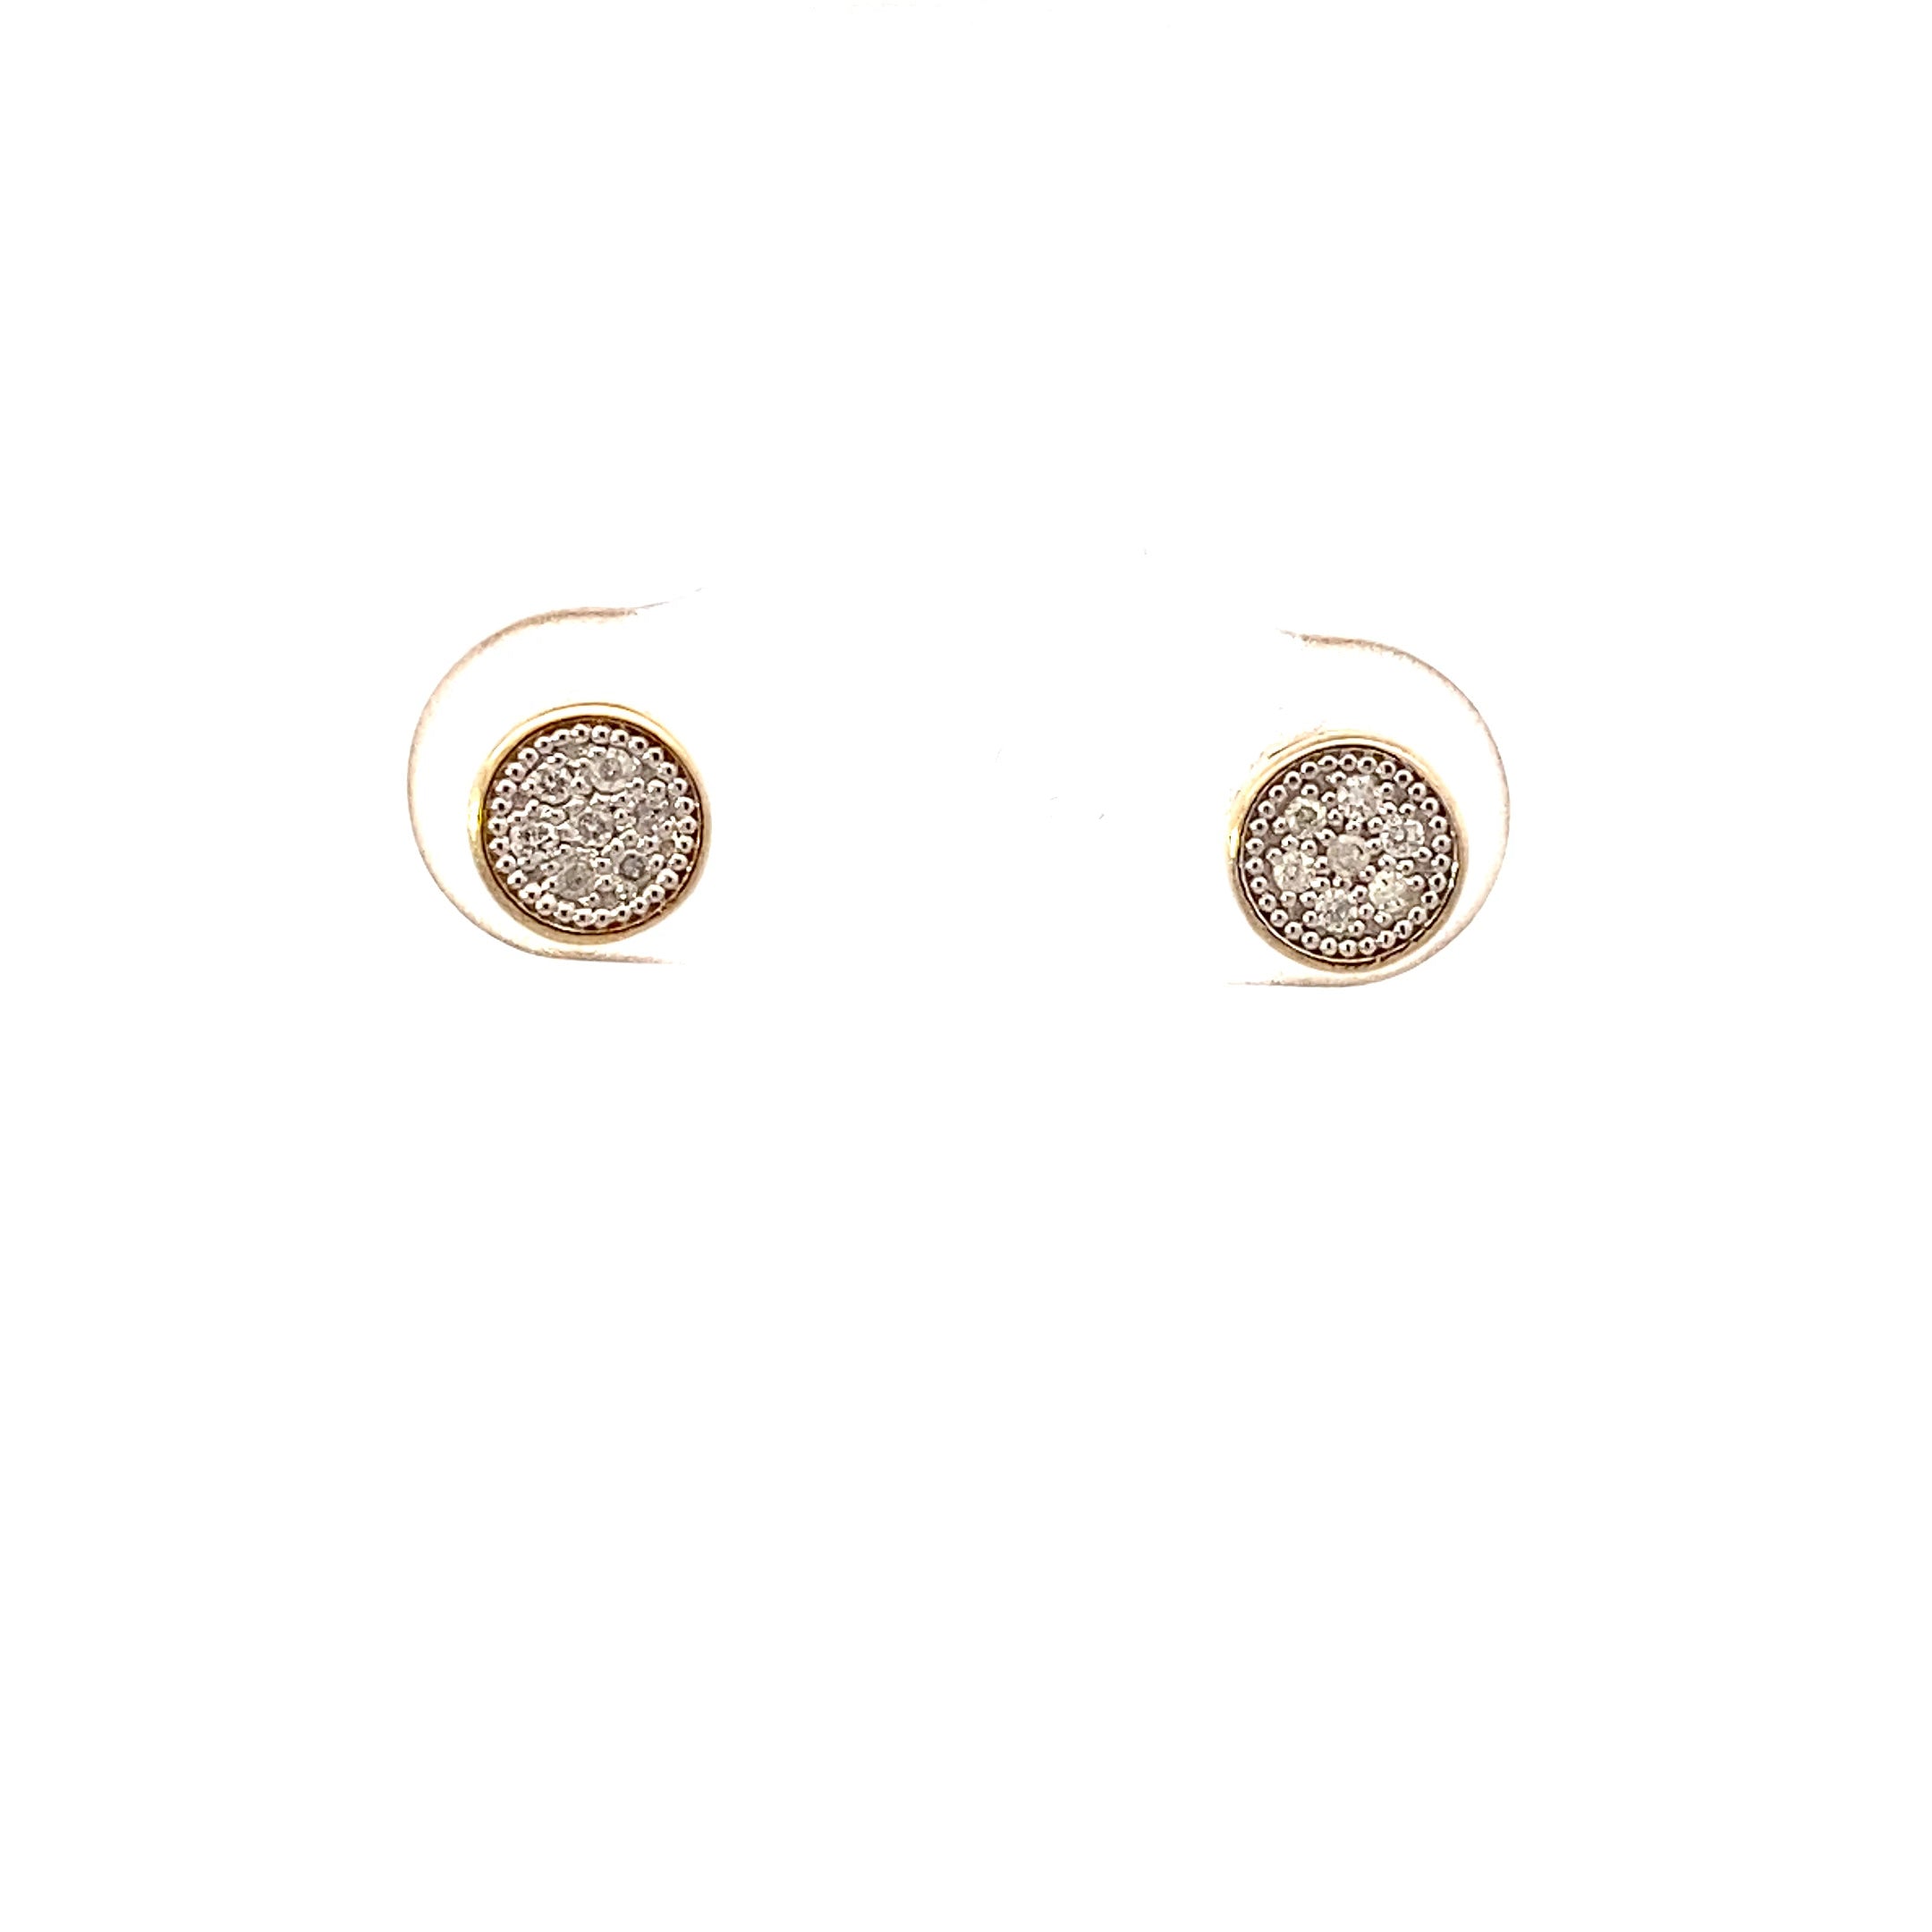 New 10K Yellow Gold Diamond Stud Earrings - 0.07ct